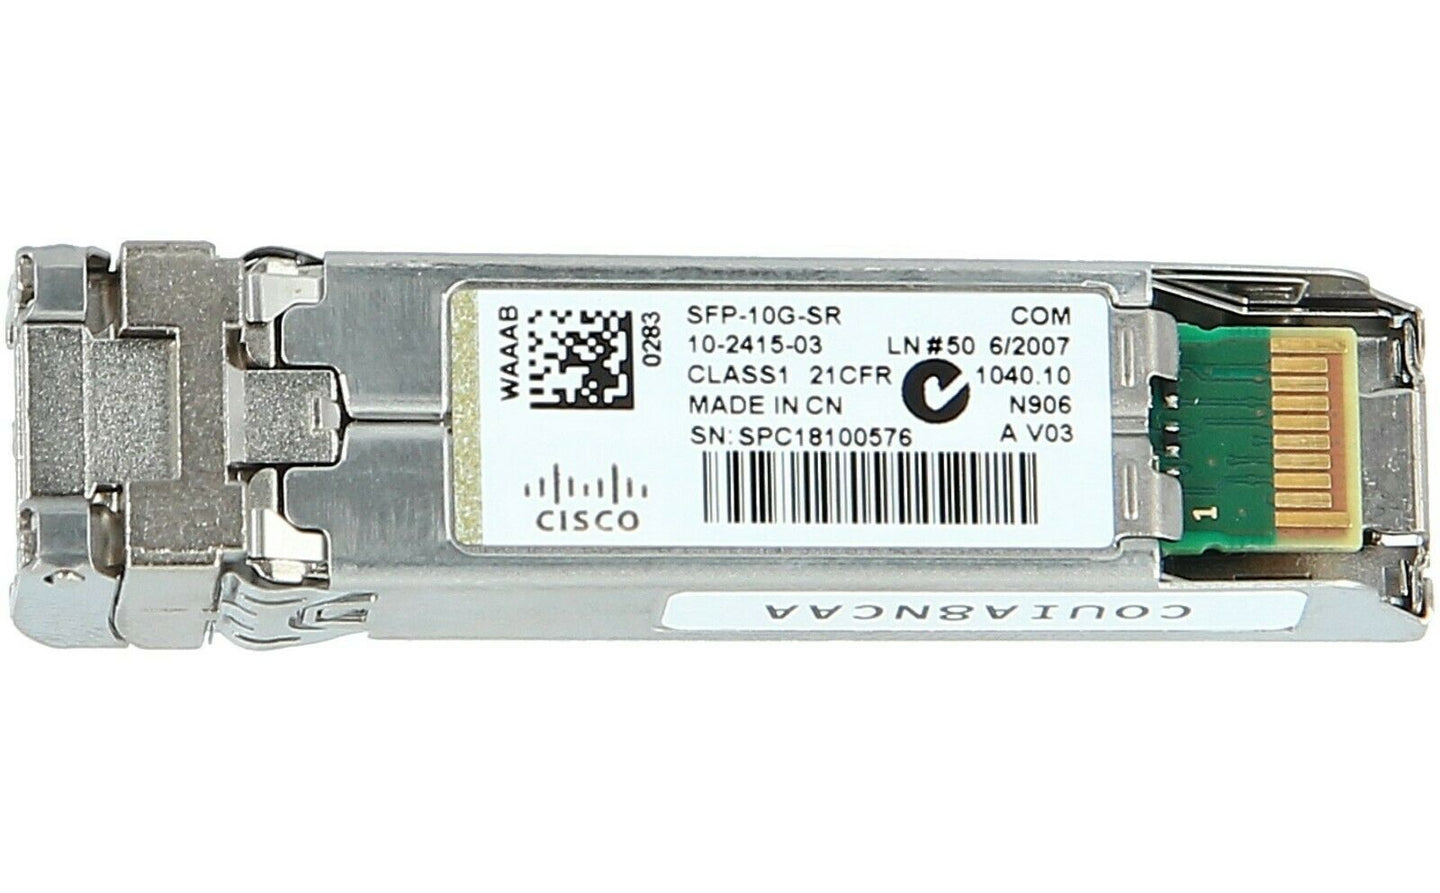 Cisco SFP-10G-SR Transceiver Module 10G 10-2415-03 Switch Networking SFP